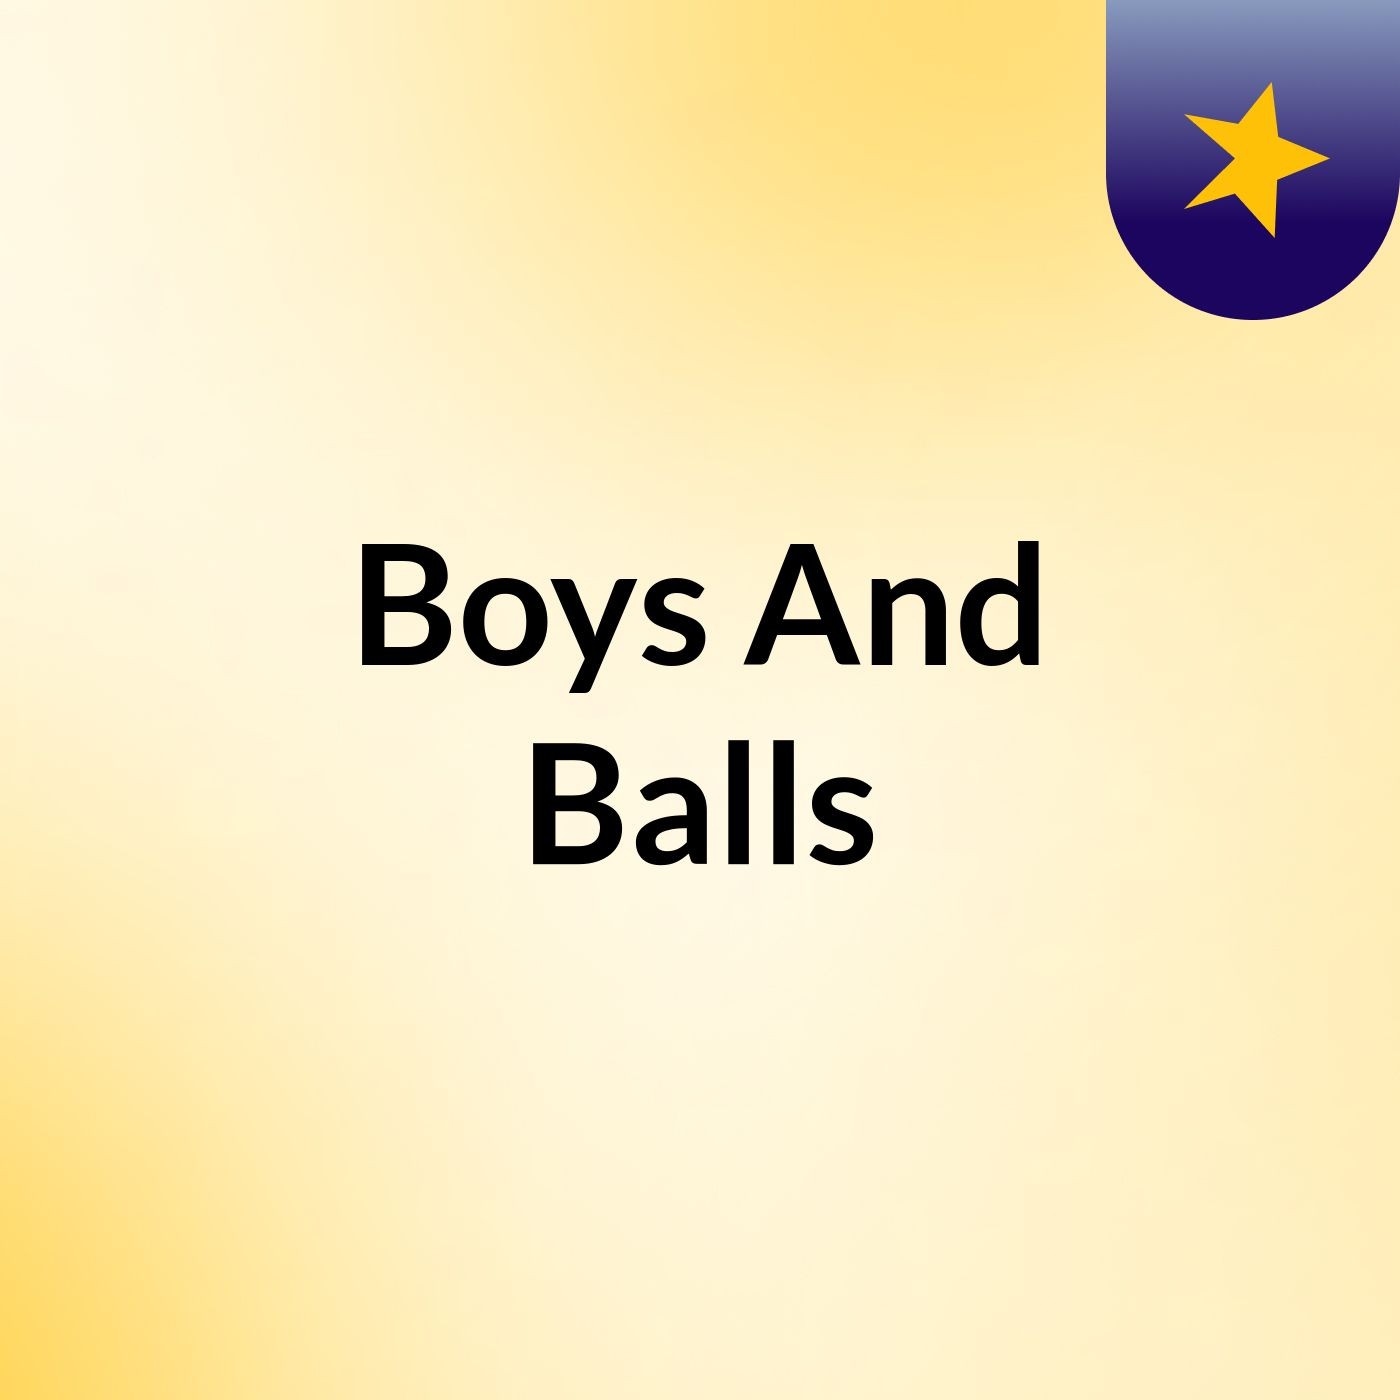 Episode 3 - Boys And Balls